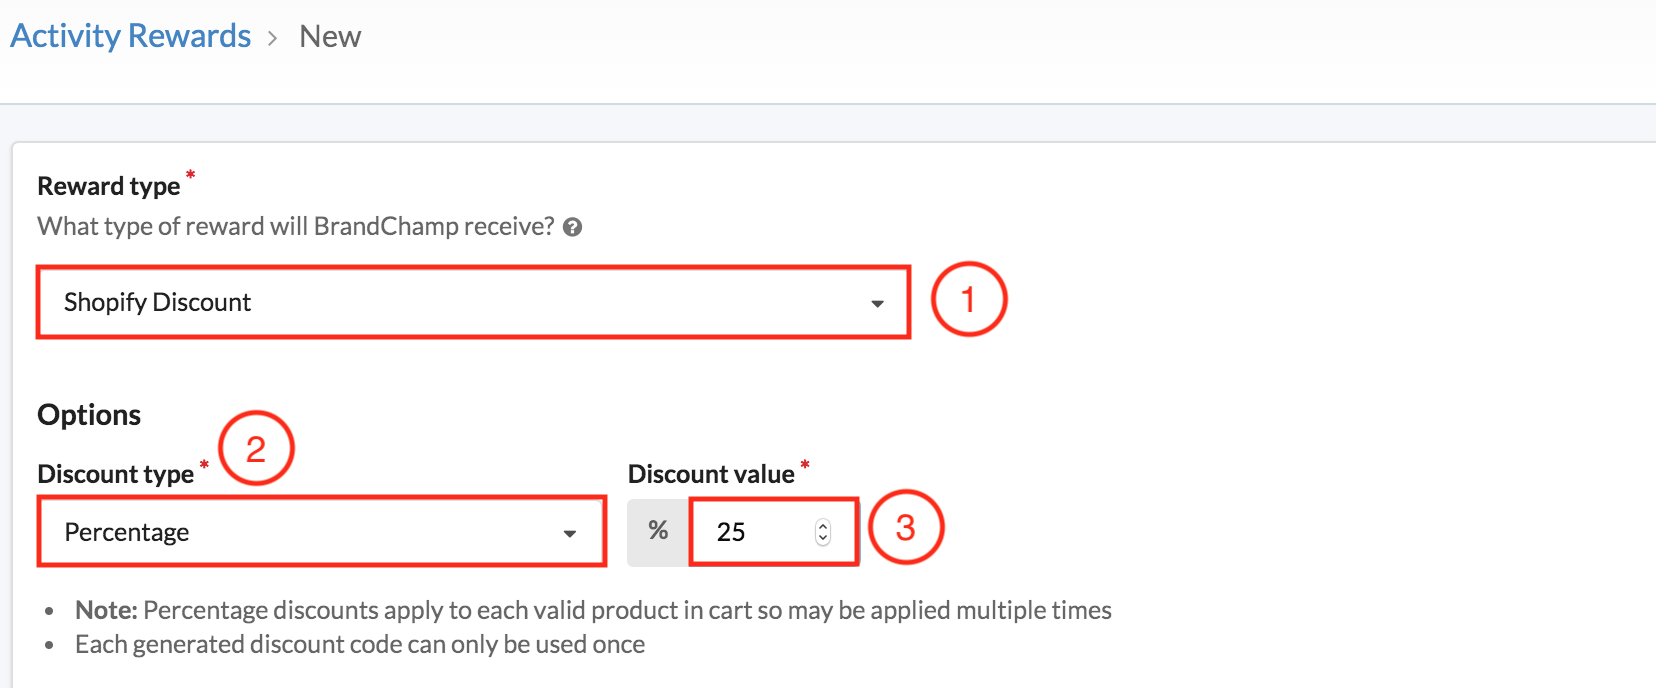 BrandChamp interface ambassador software reward types Shopify discount percentage discount